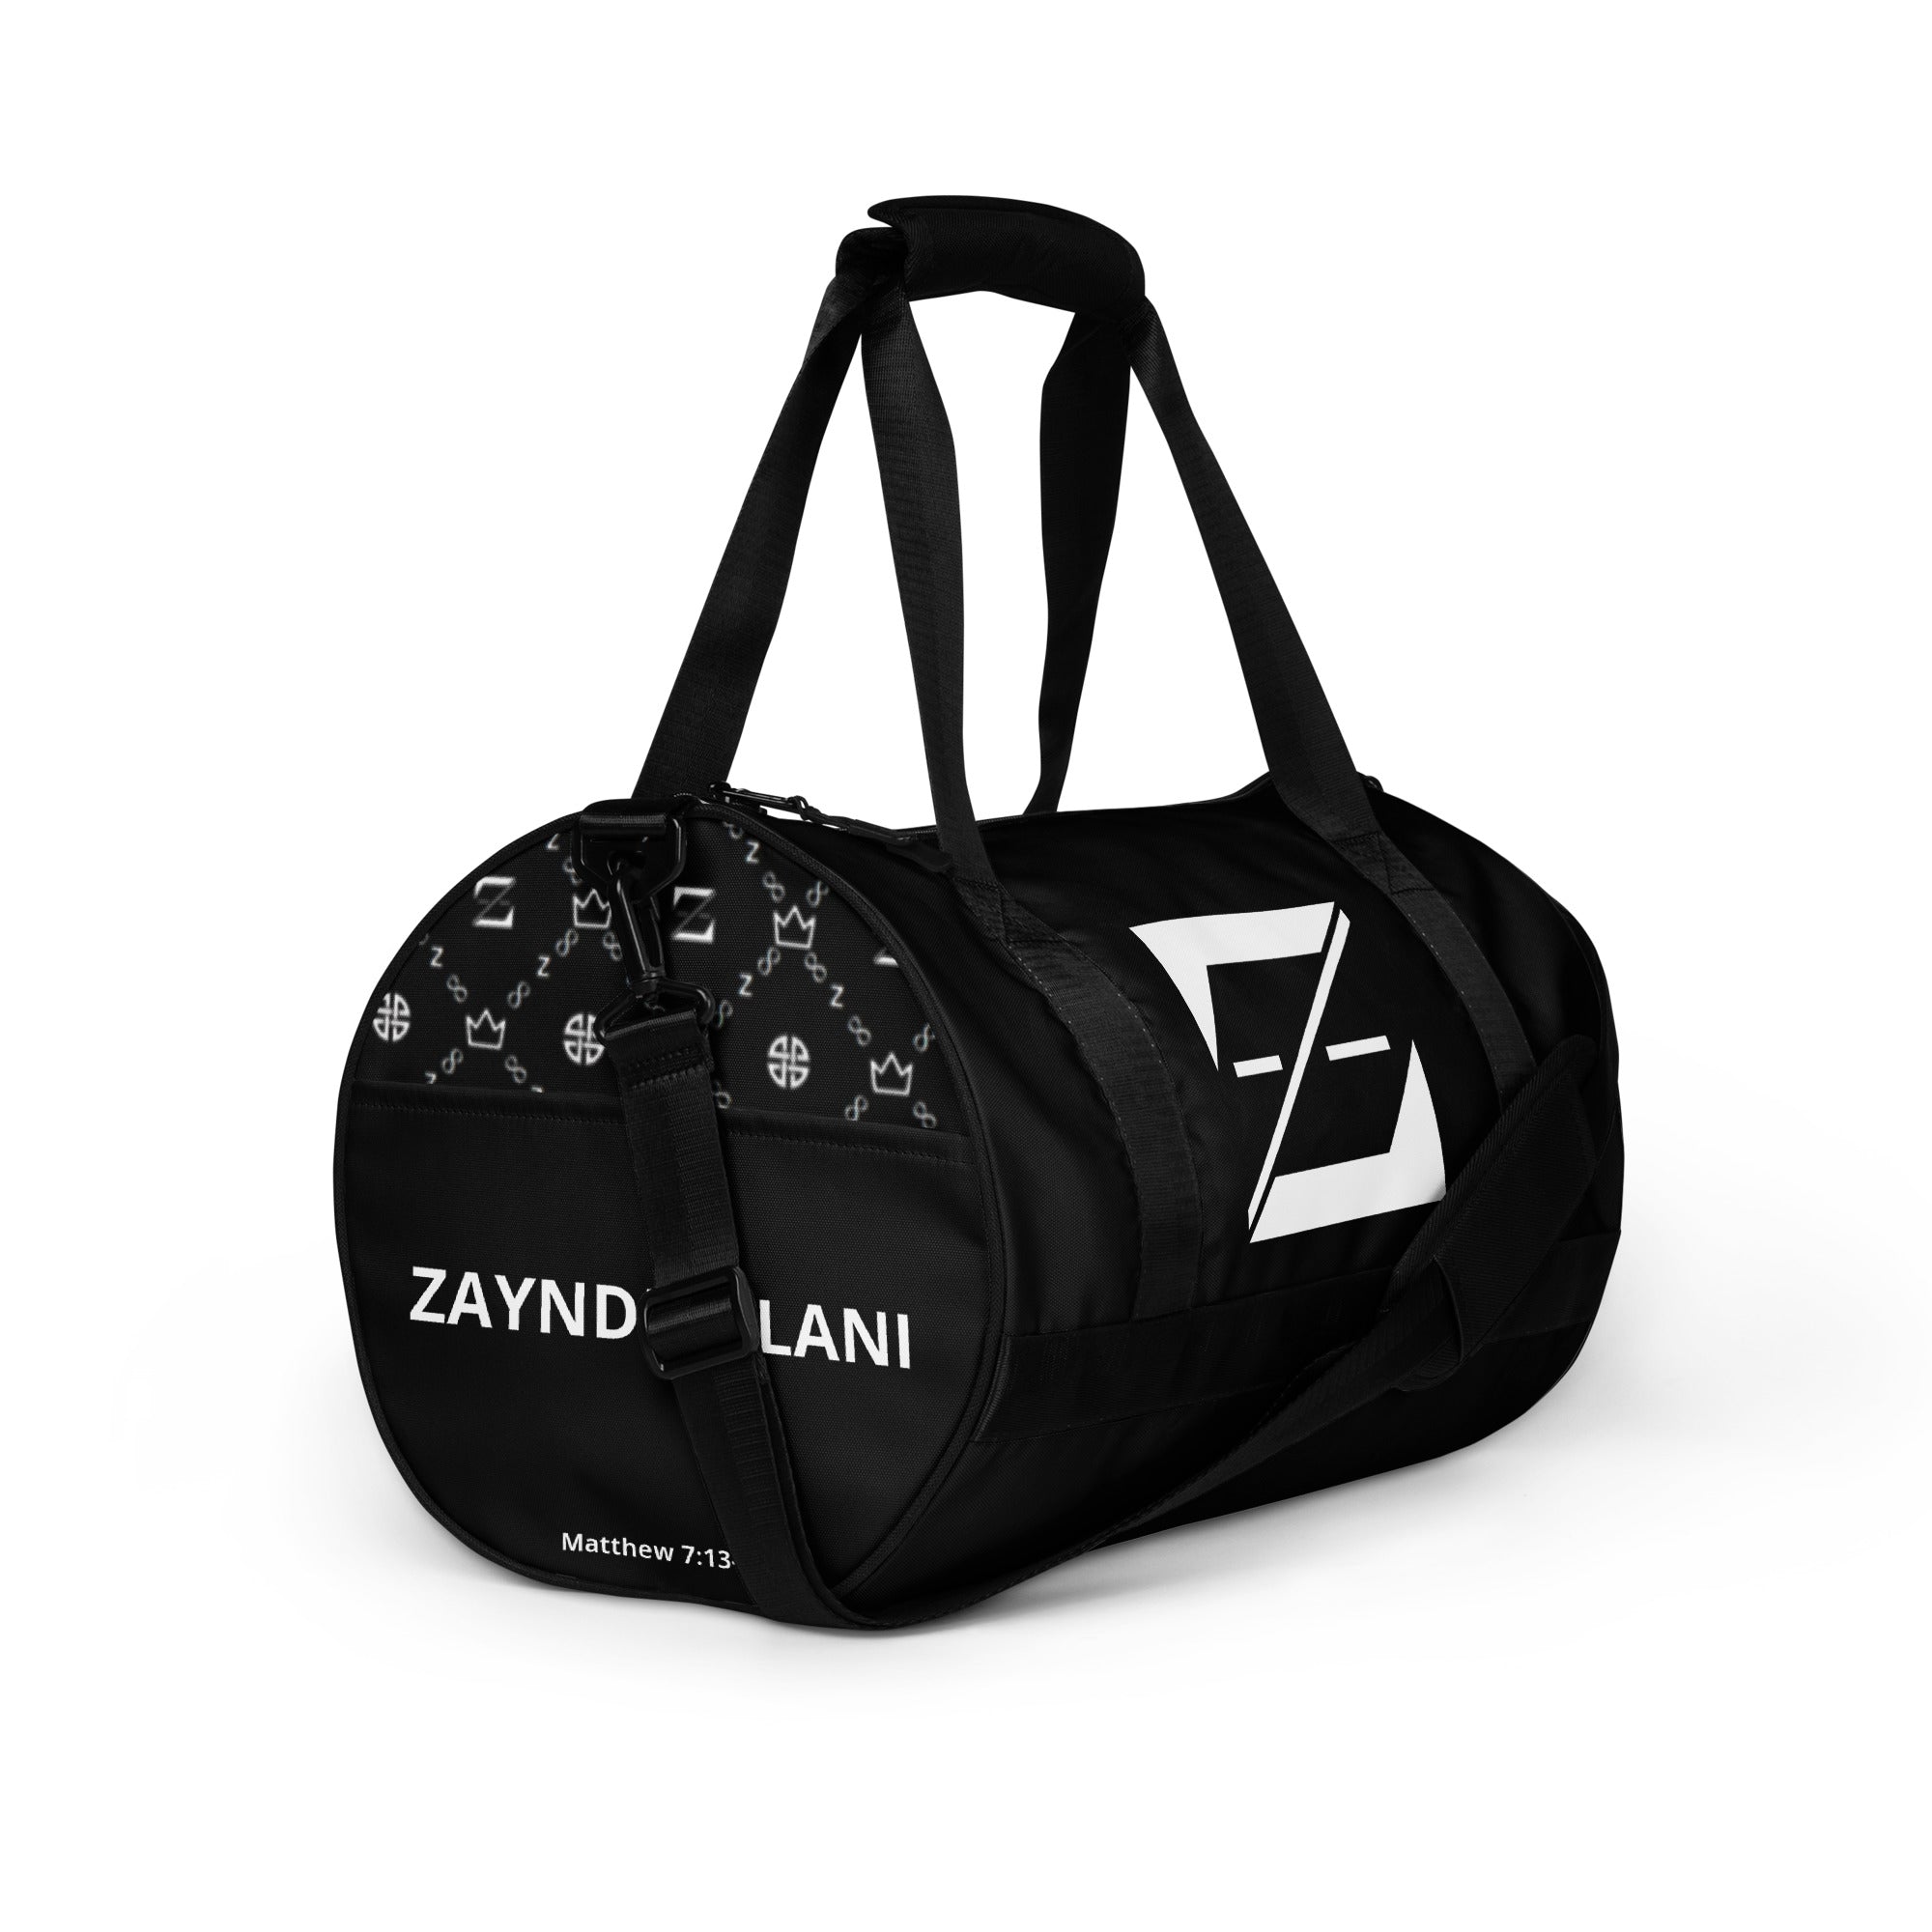 Zayndeellani Monogram Duffle Bag Black - Zayndeellani